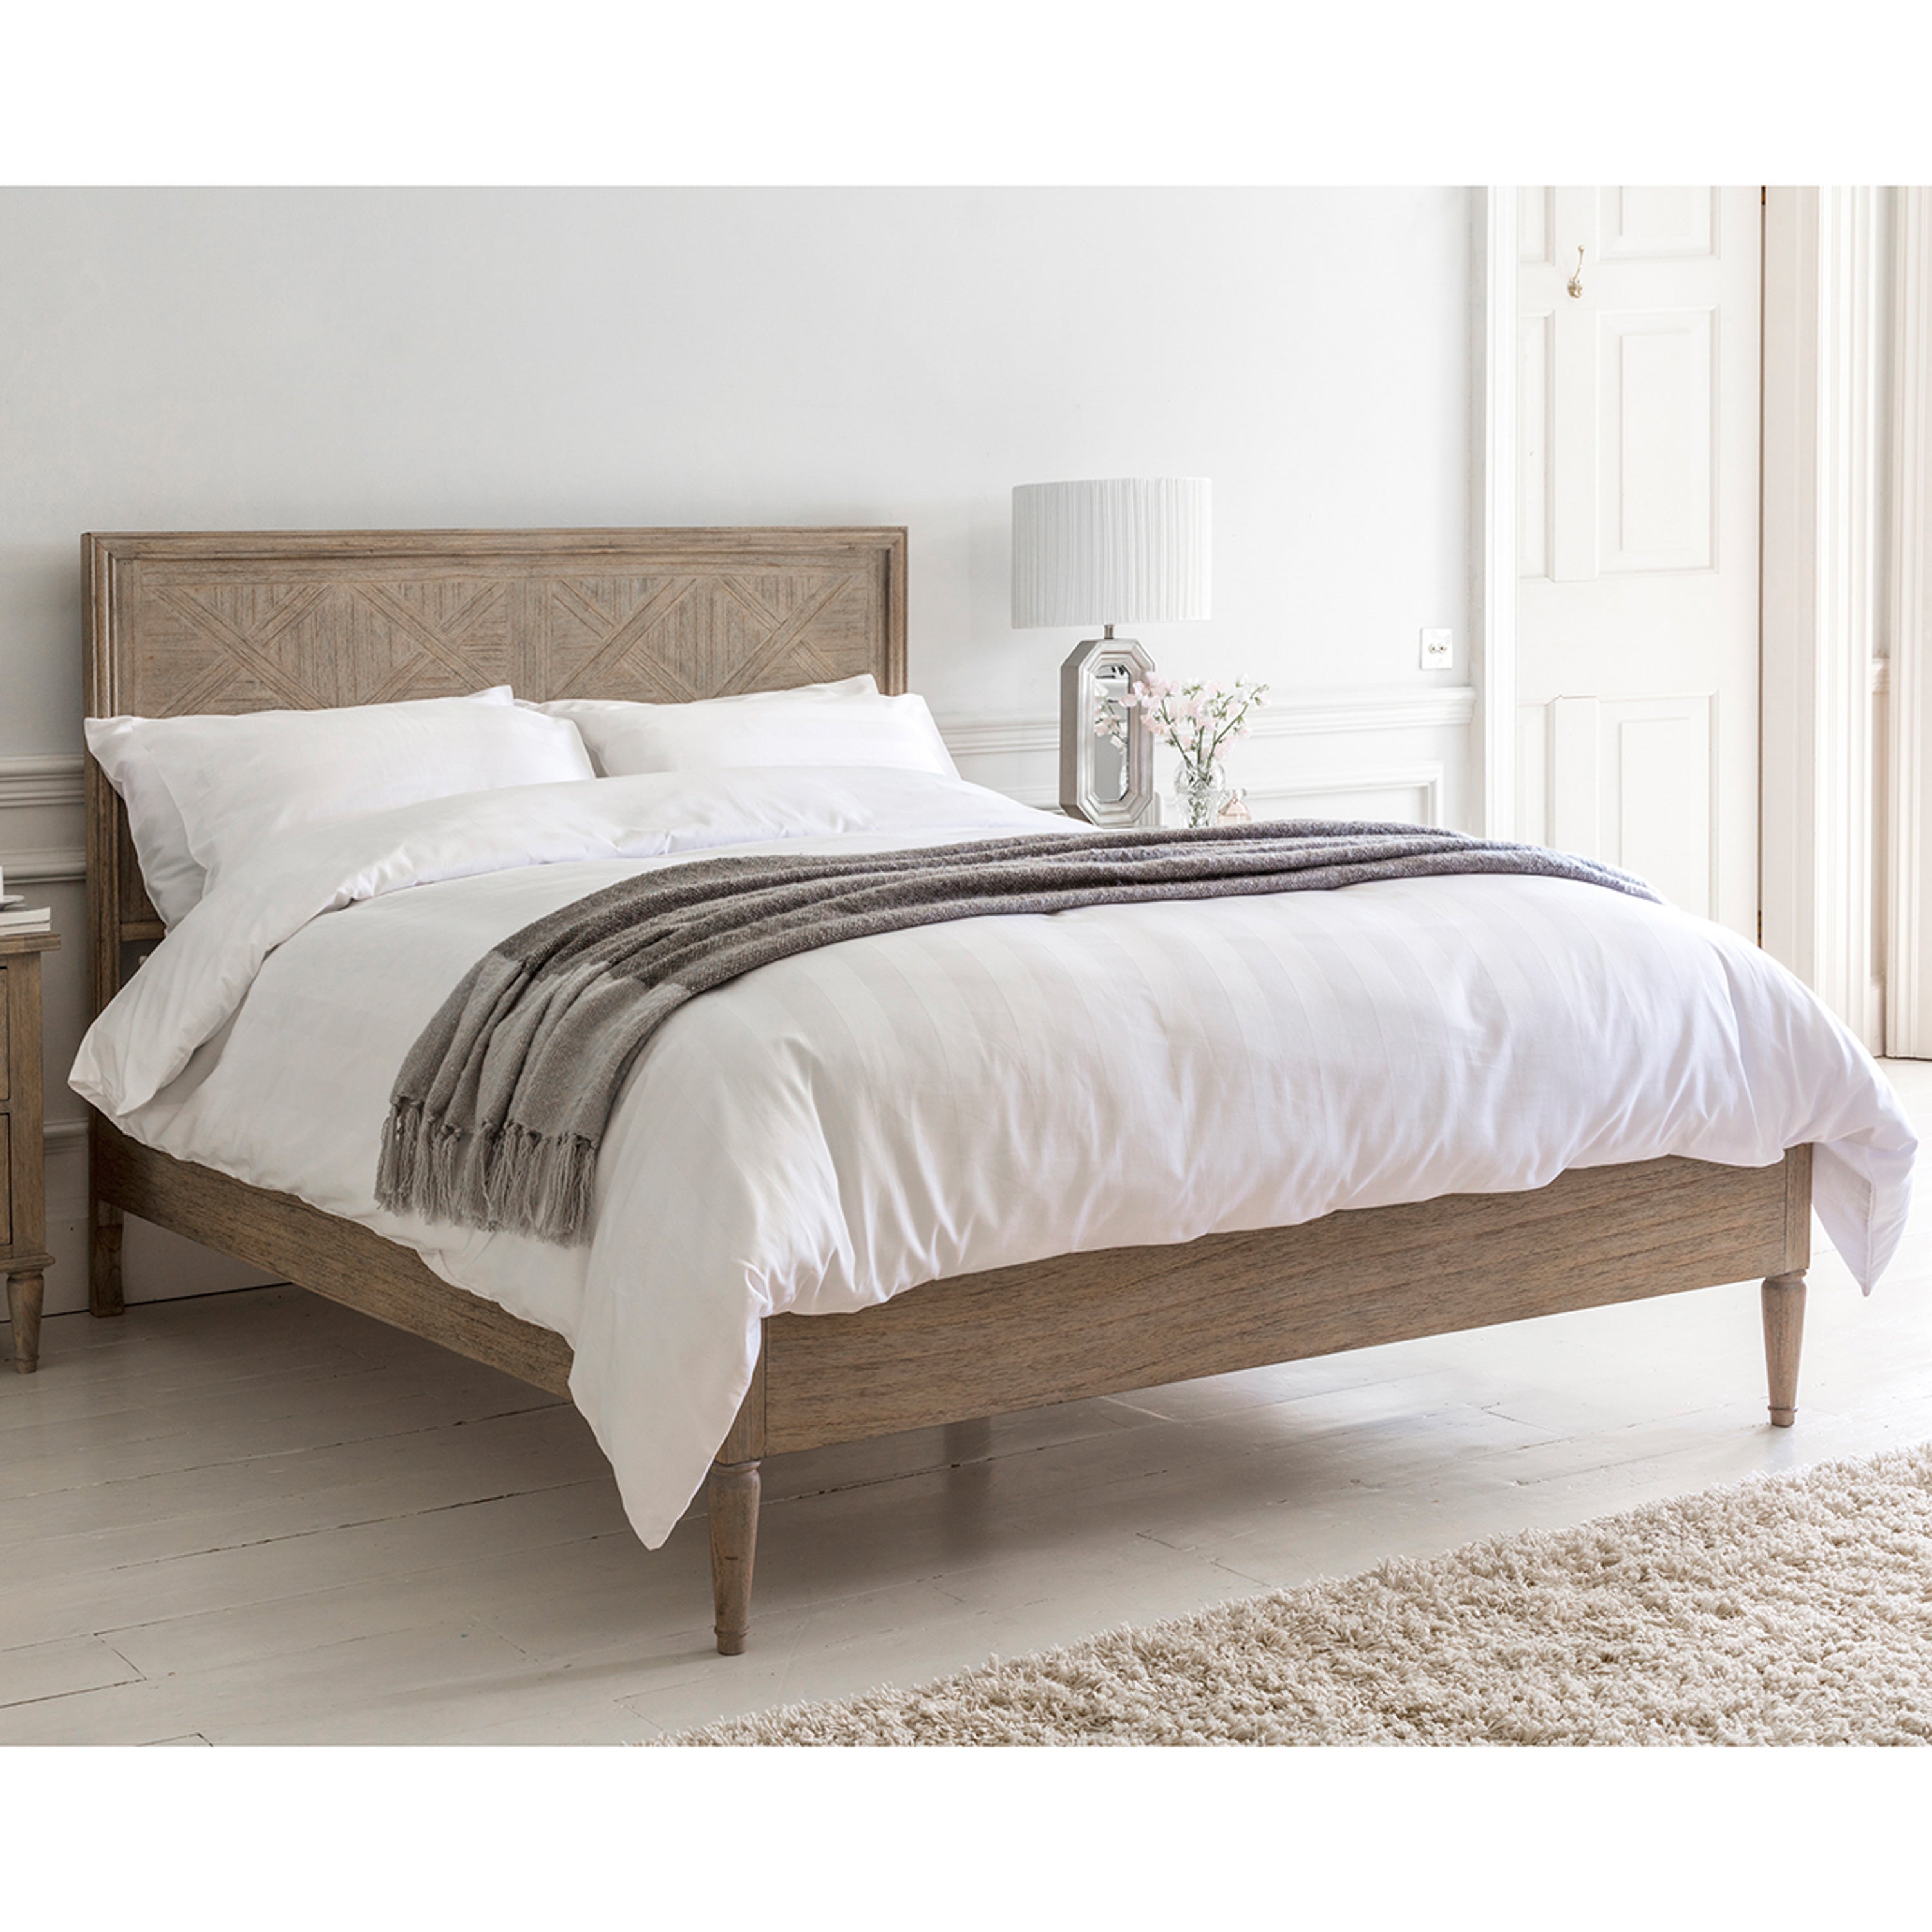 Modesto Wooden Bed Frame